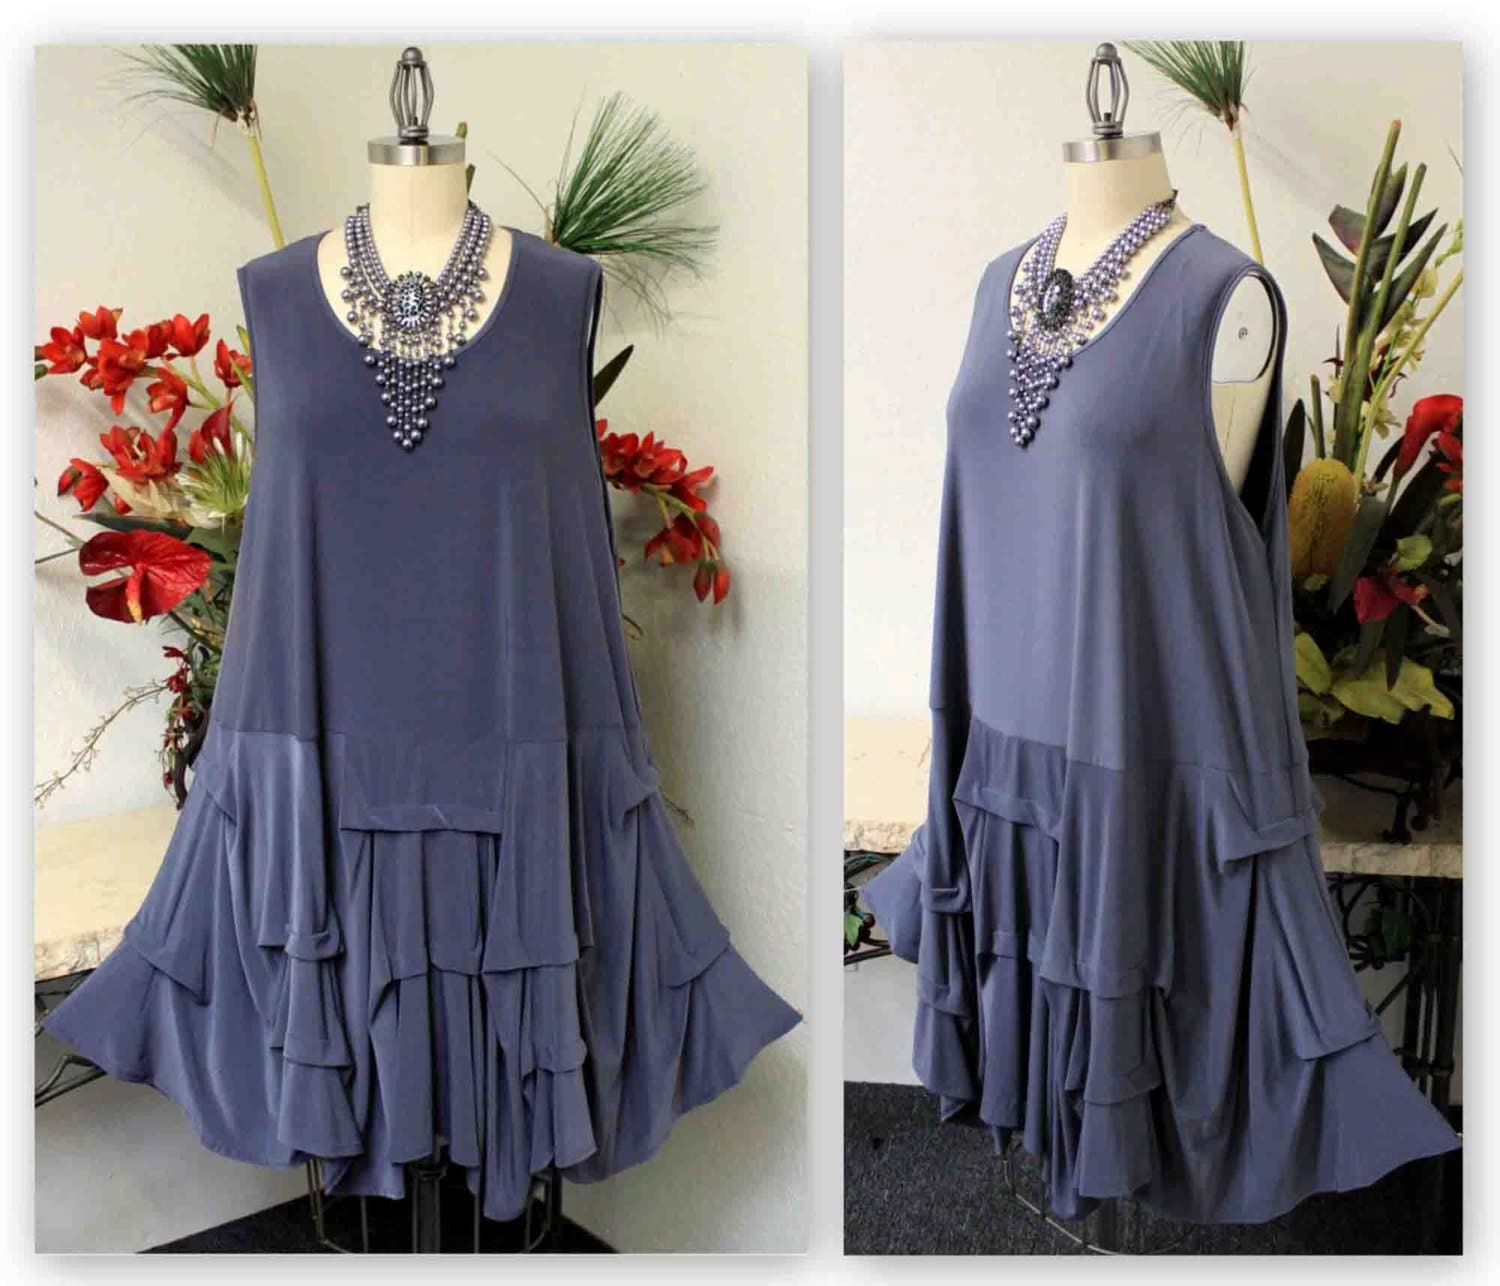 Full Figure Plus size tunic dress in lagenlook style.Designer